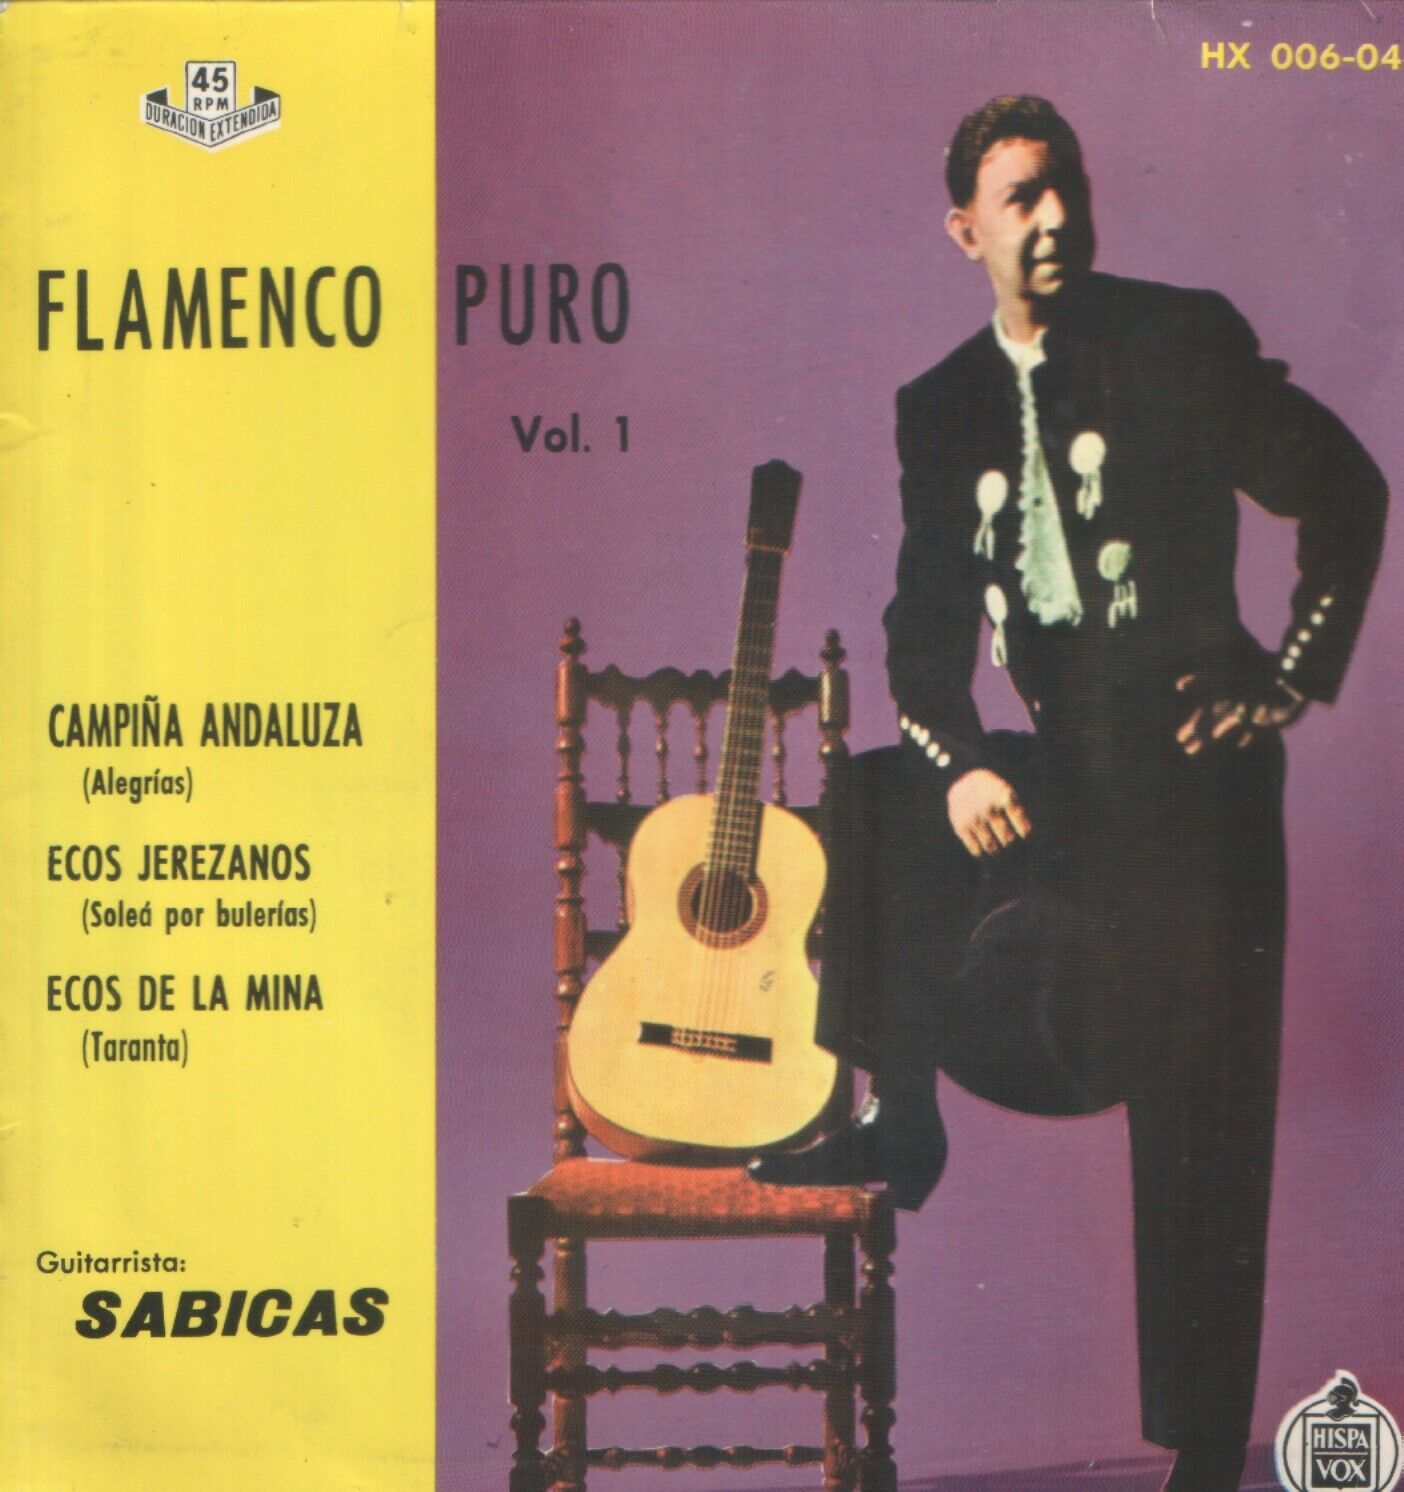 SABICAS EP Spain 1959 Flamenco puro Vol. 1 (EP) 09121 Vinyl Singles EP VINYLSINGLES.NL